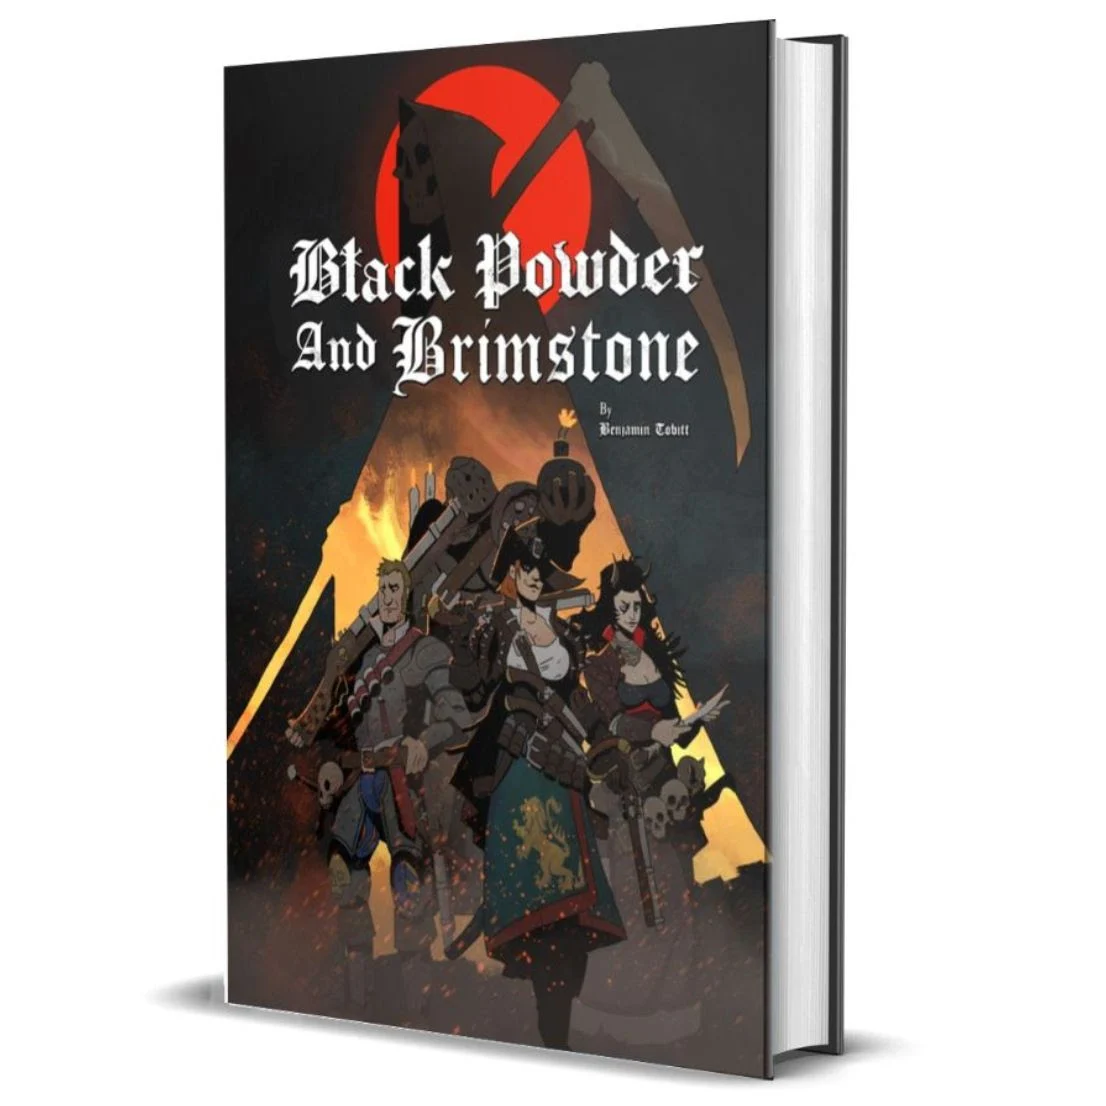 Black Powder and Brimstone RPG Partnership Announced